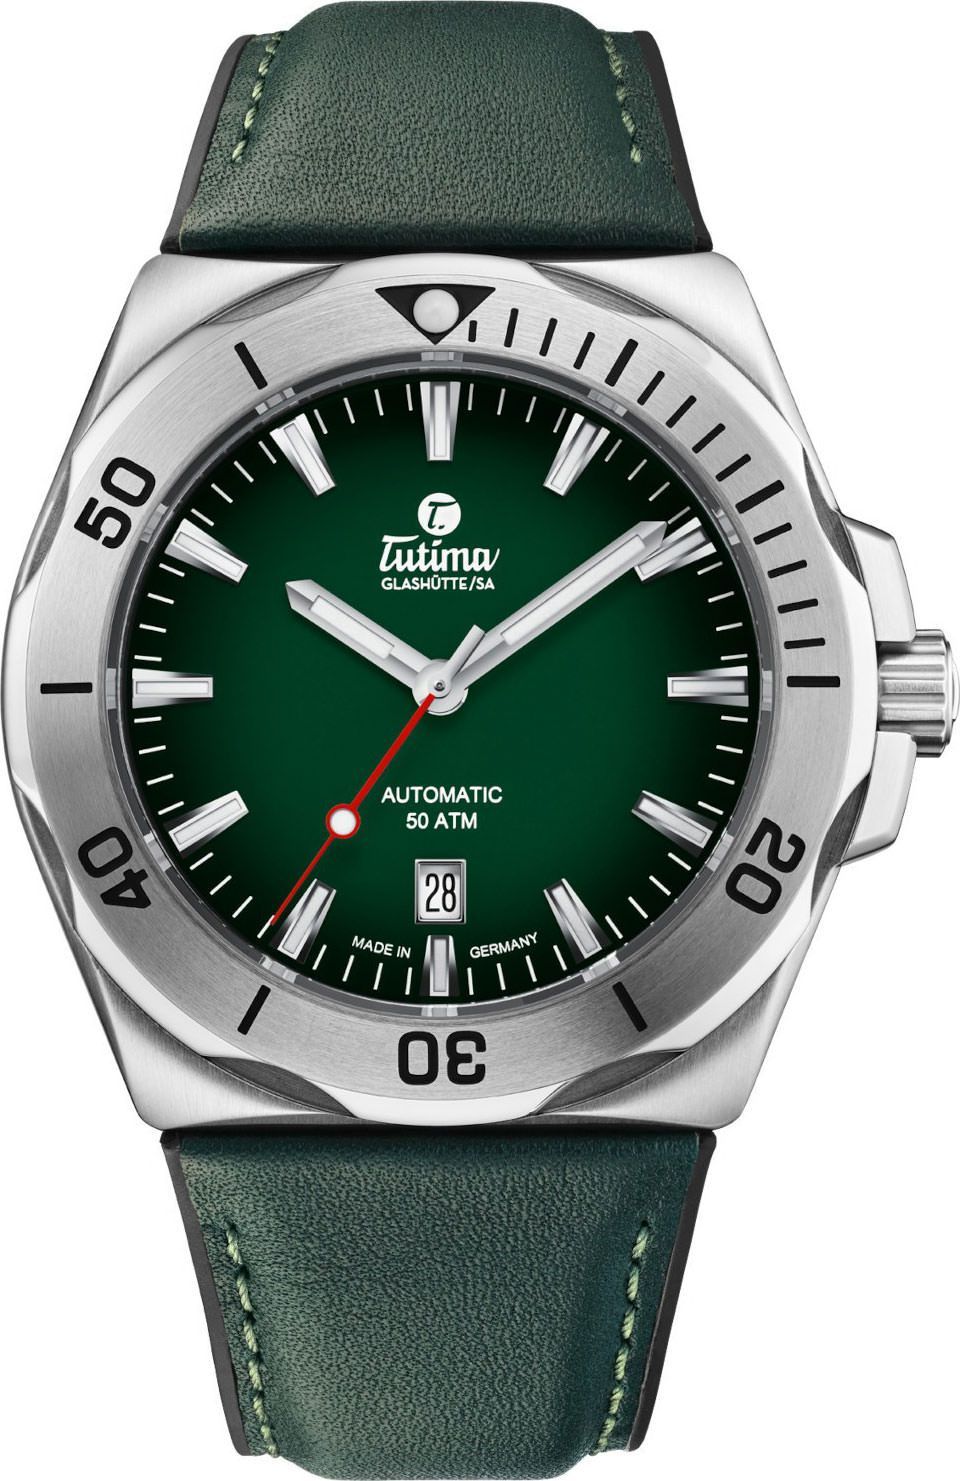 Tutima Glashütte M2 Seven Seas S Green Dial 44 mm Automatic Watch For Men - 1